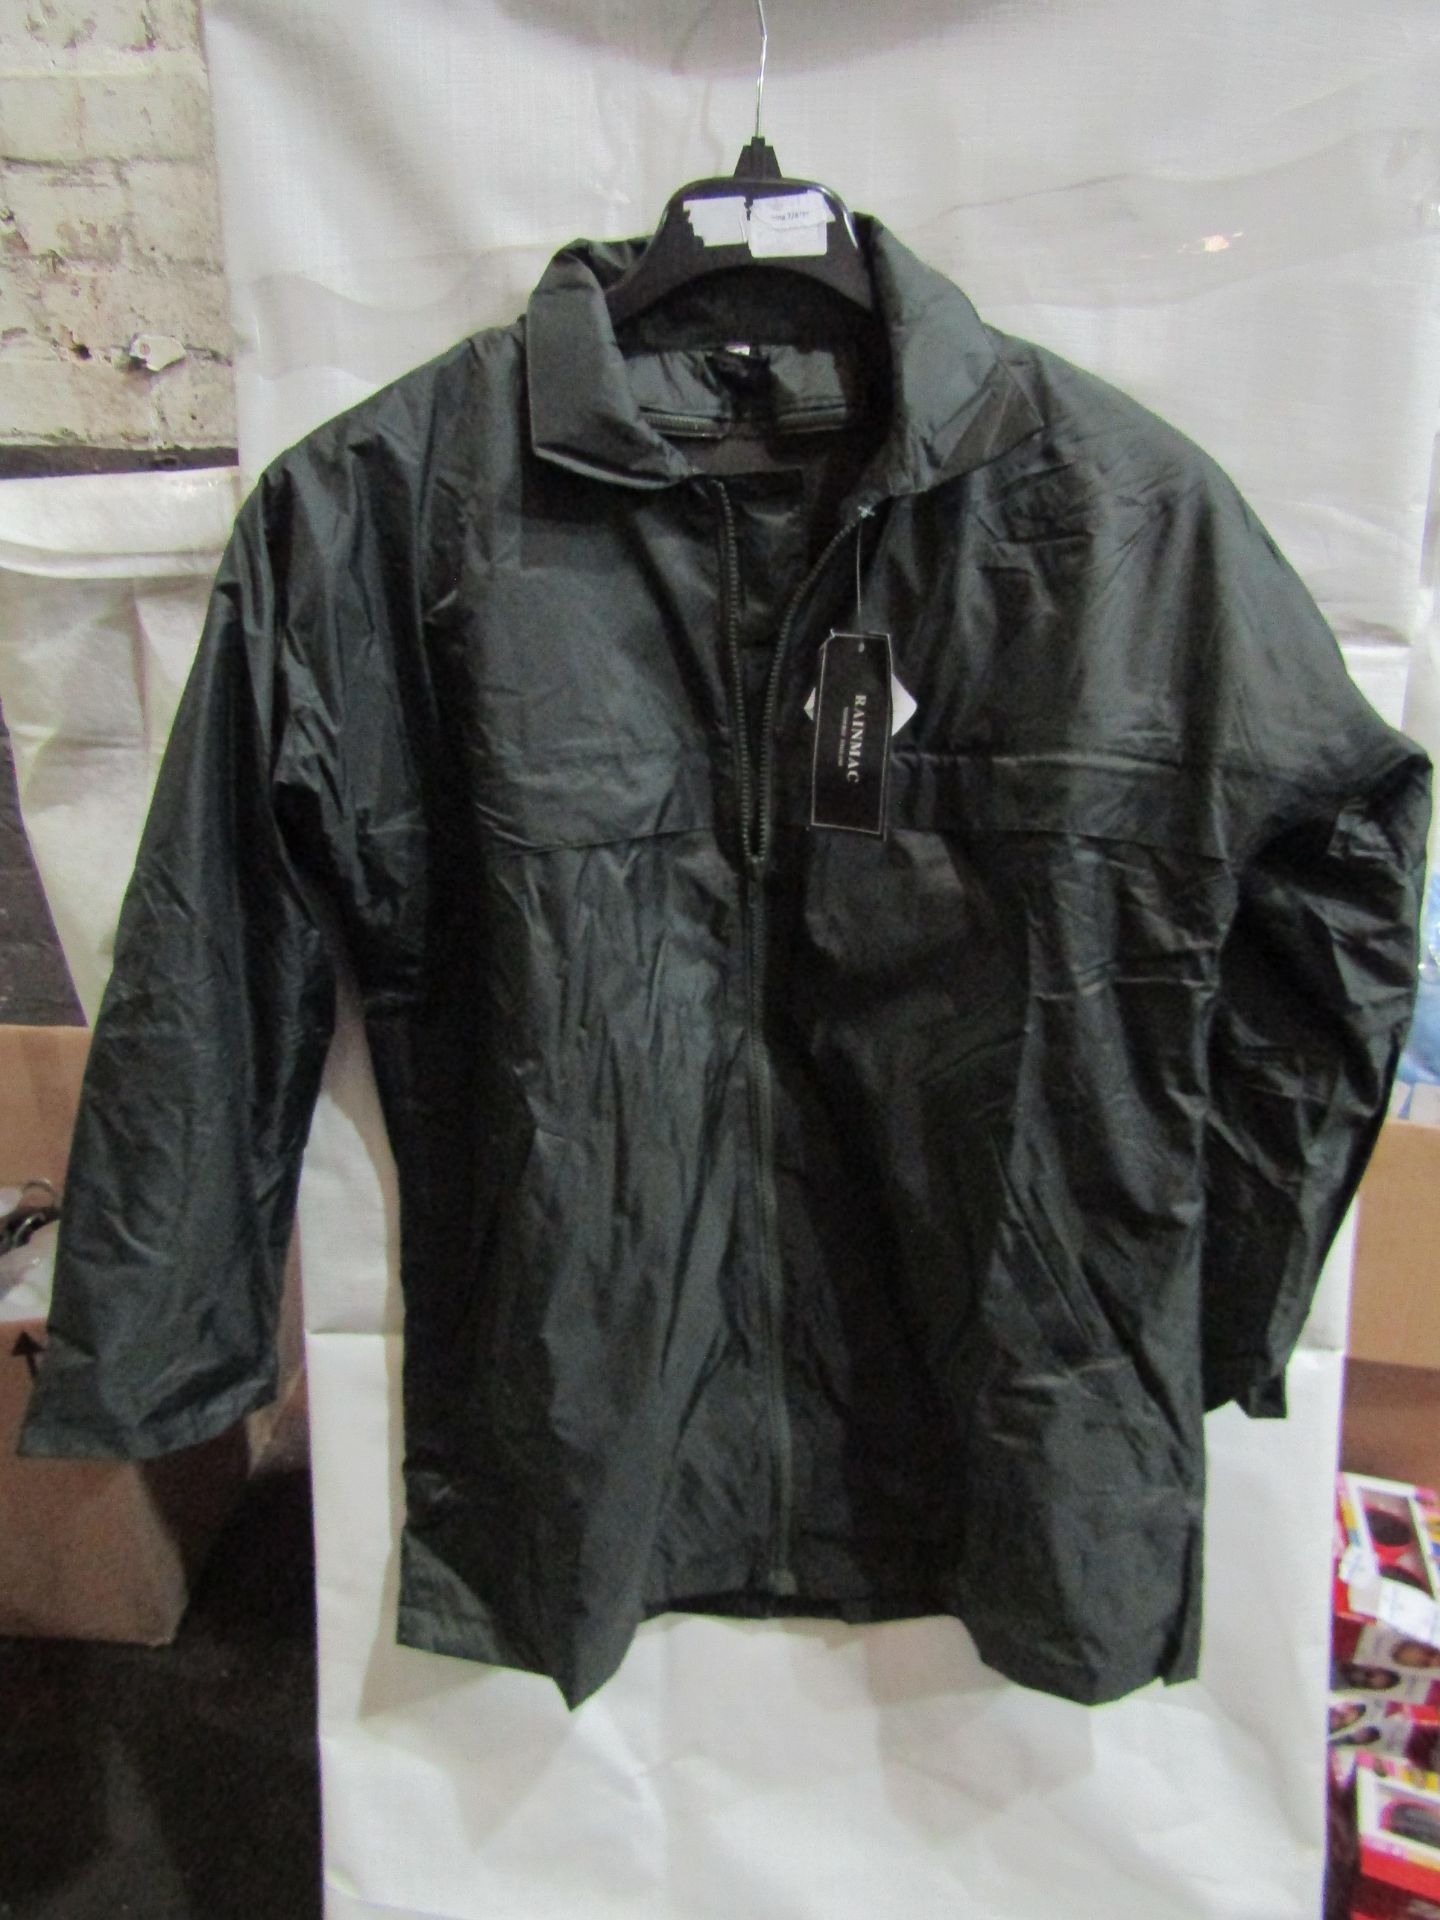 Rainmac Ladies Dark Green Rain Coat With Detachable Lined Fleece, Size: 14 - Unused & Packaged.